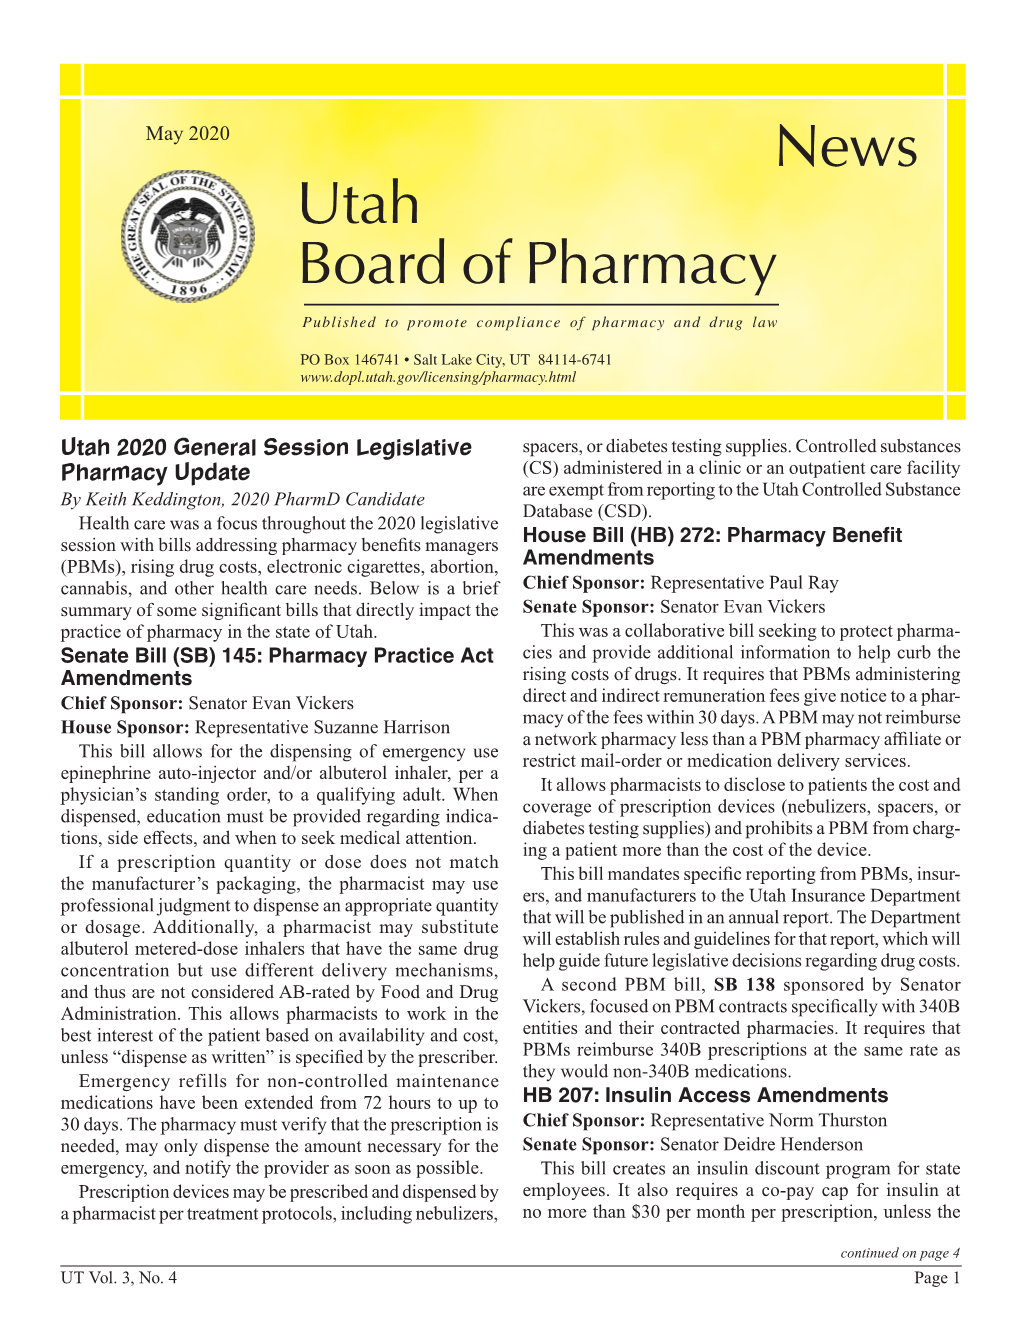 News Utah Board of Pharmacy